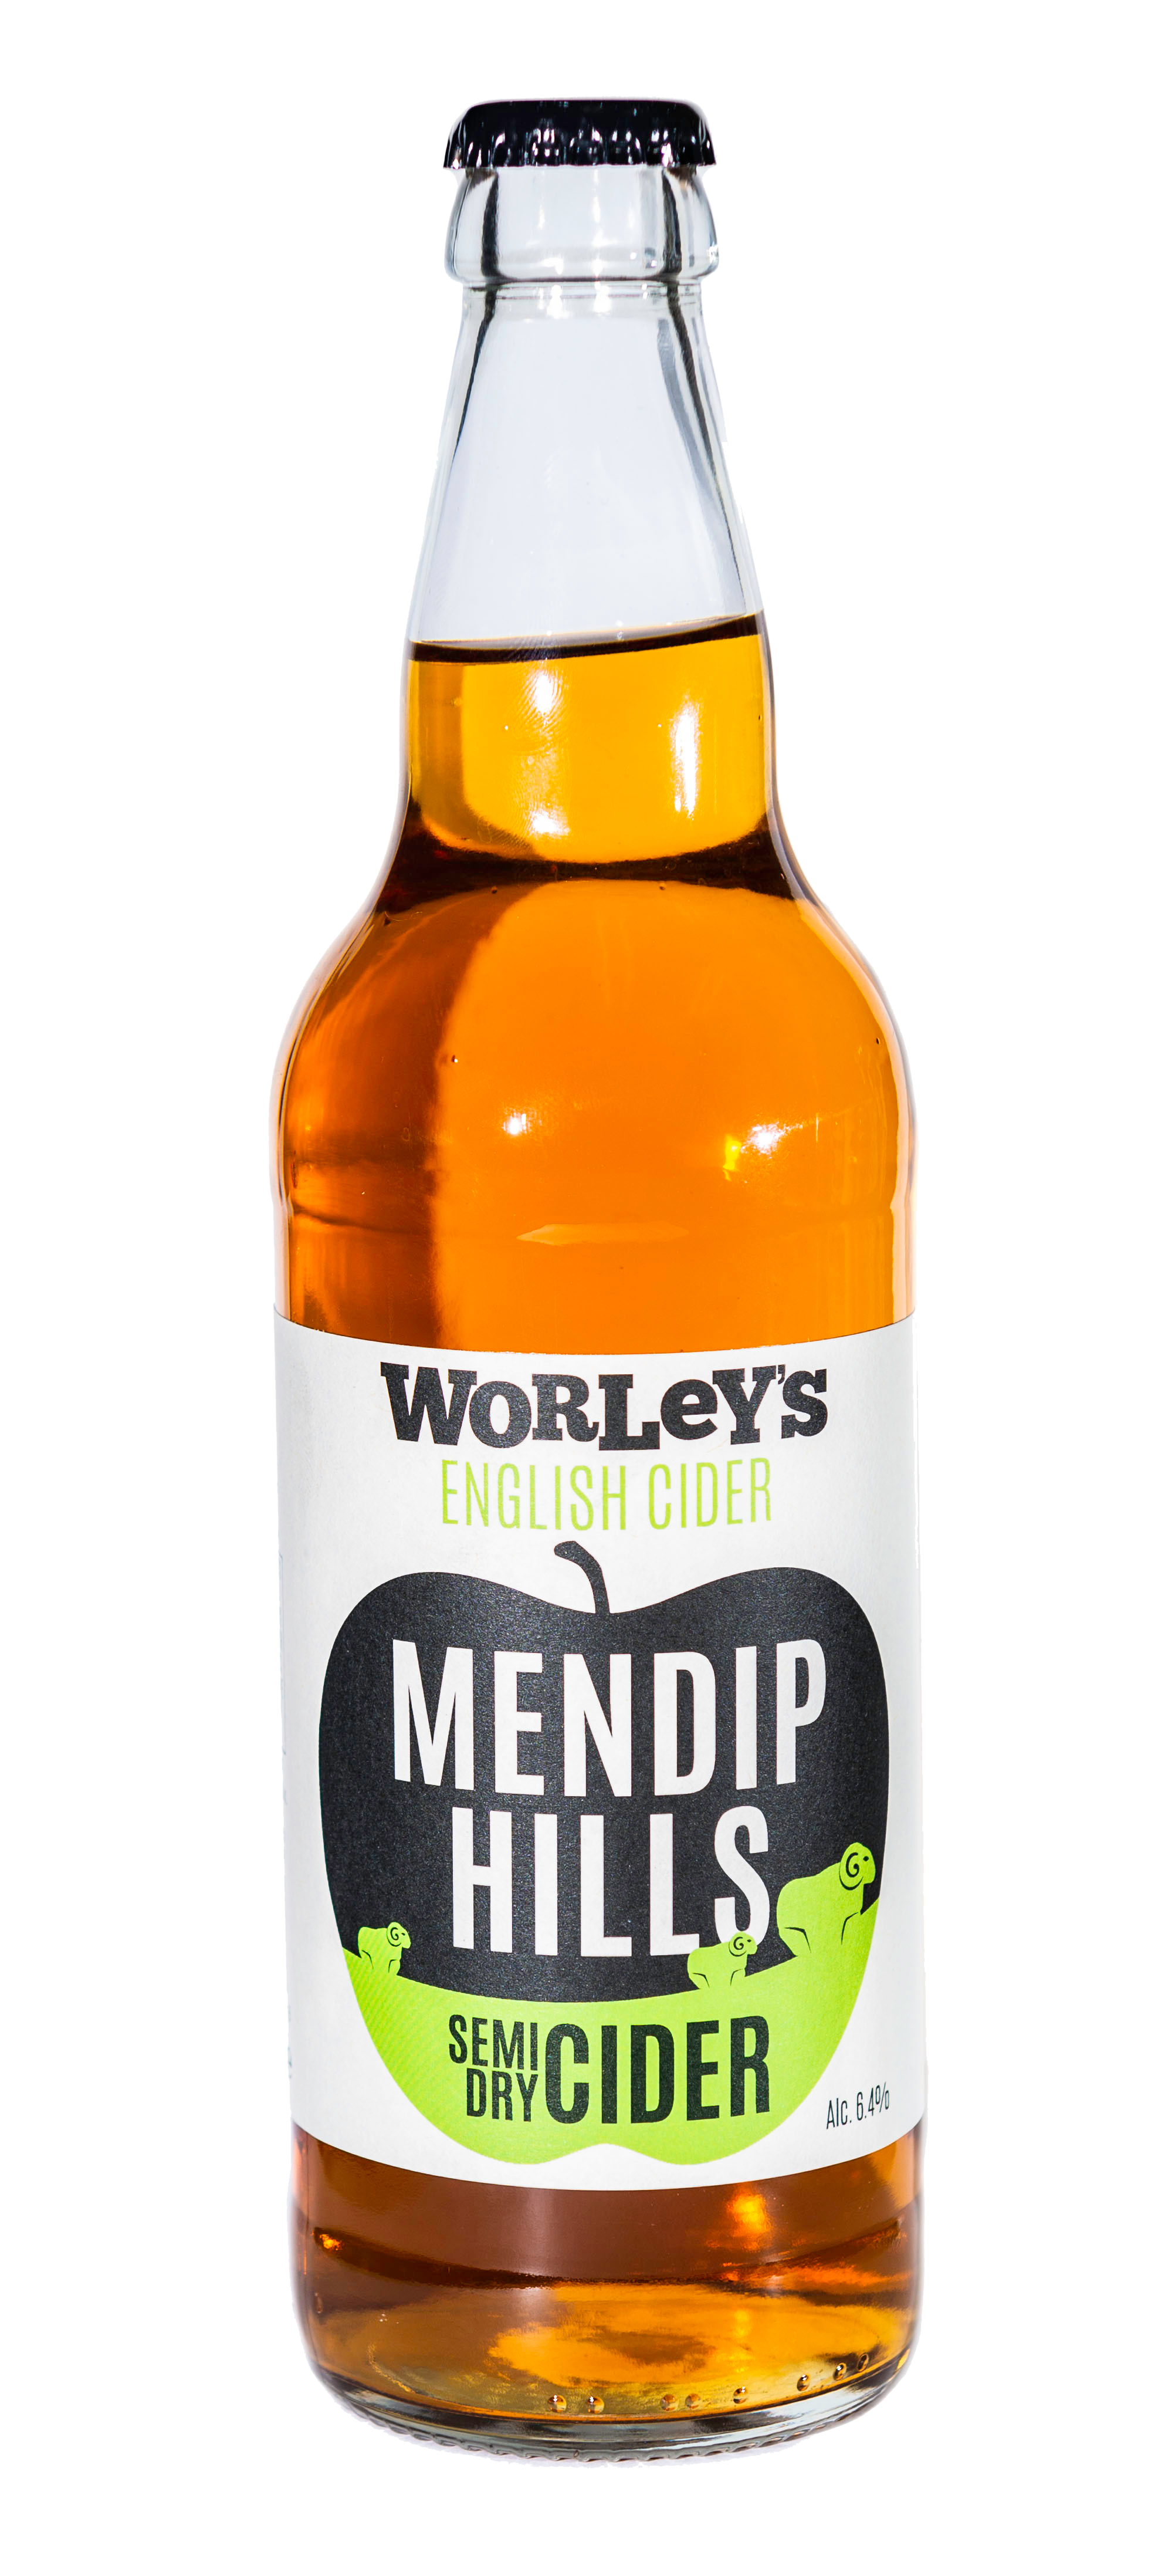 Worleys Mendip bottle shot.png